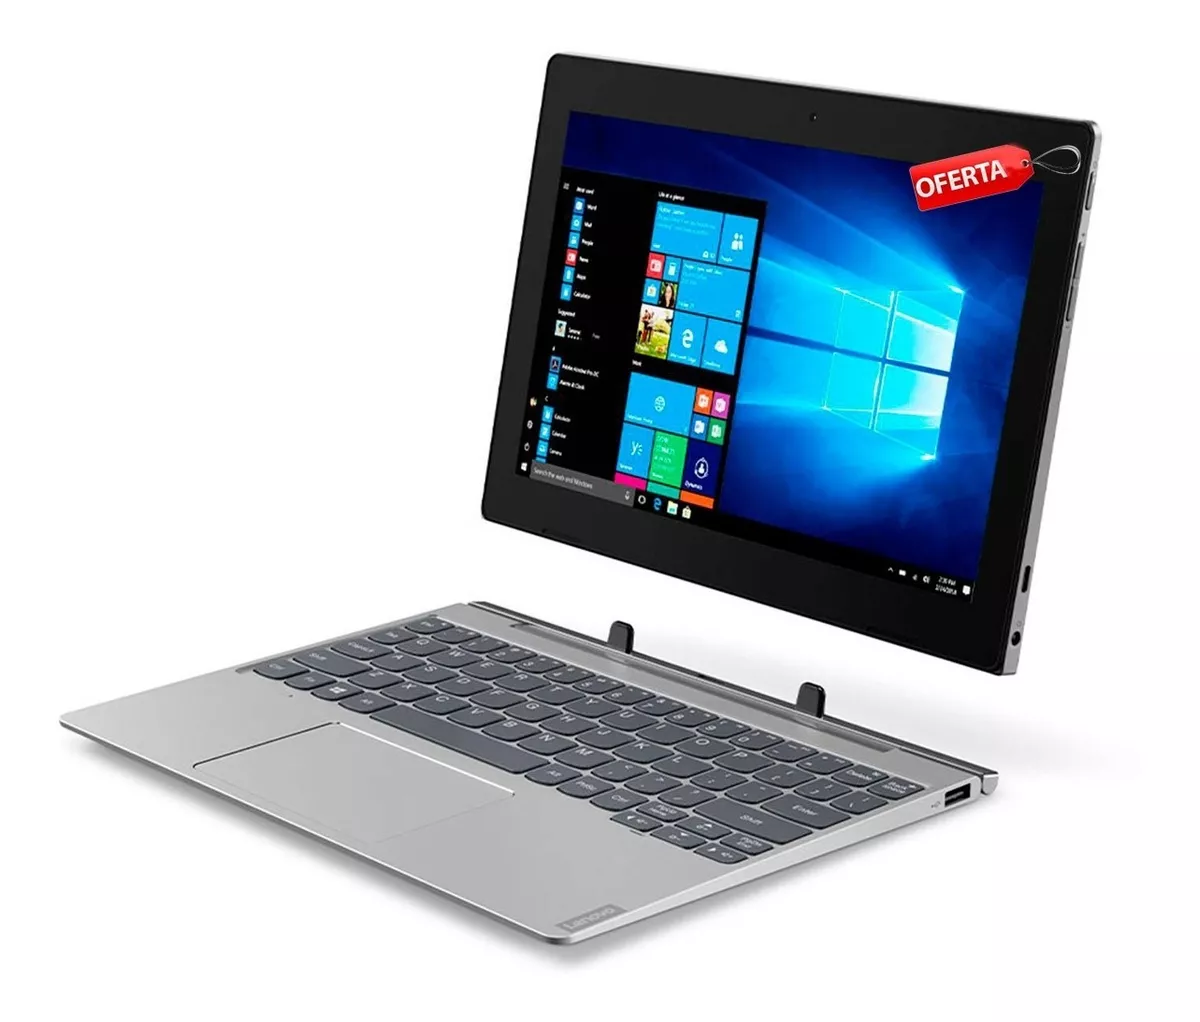  Lenovo Ideapad D330-10igl 4gb+64gb Con Windows 10 Home